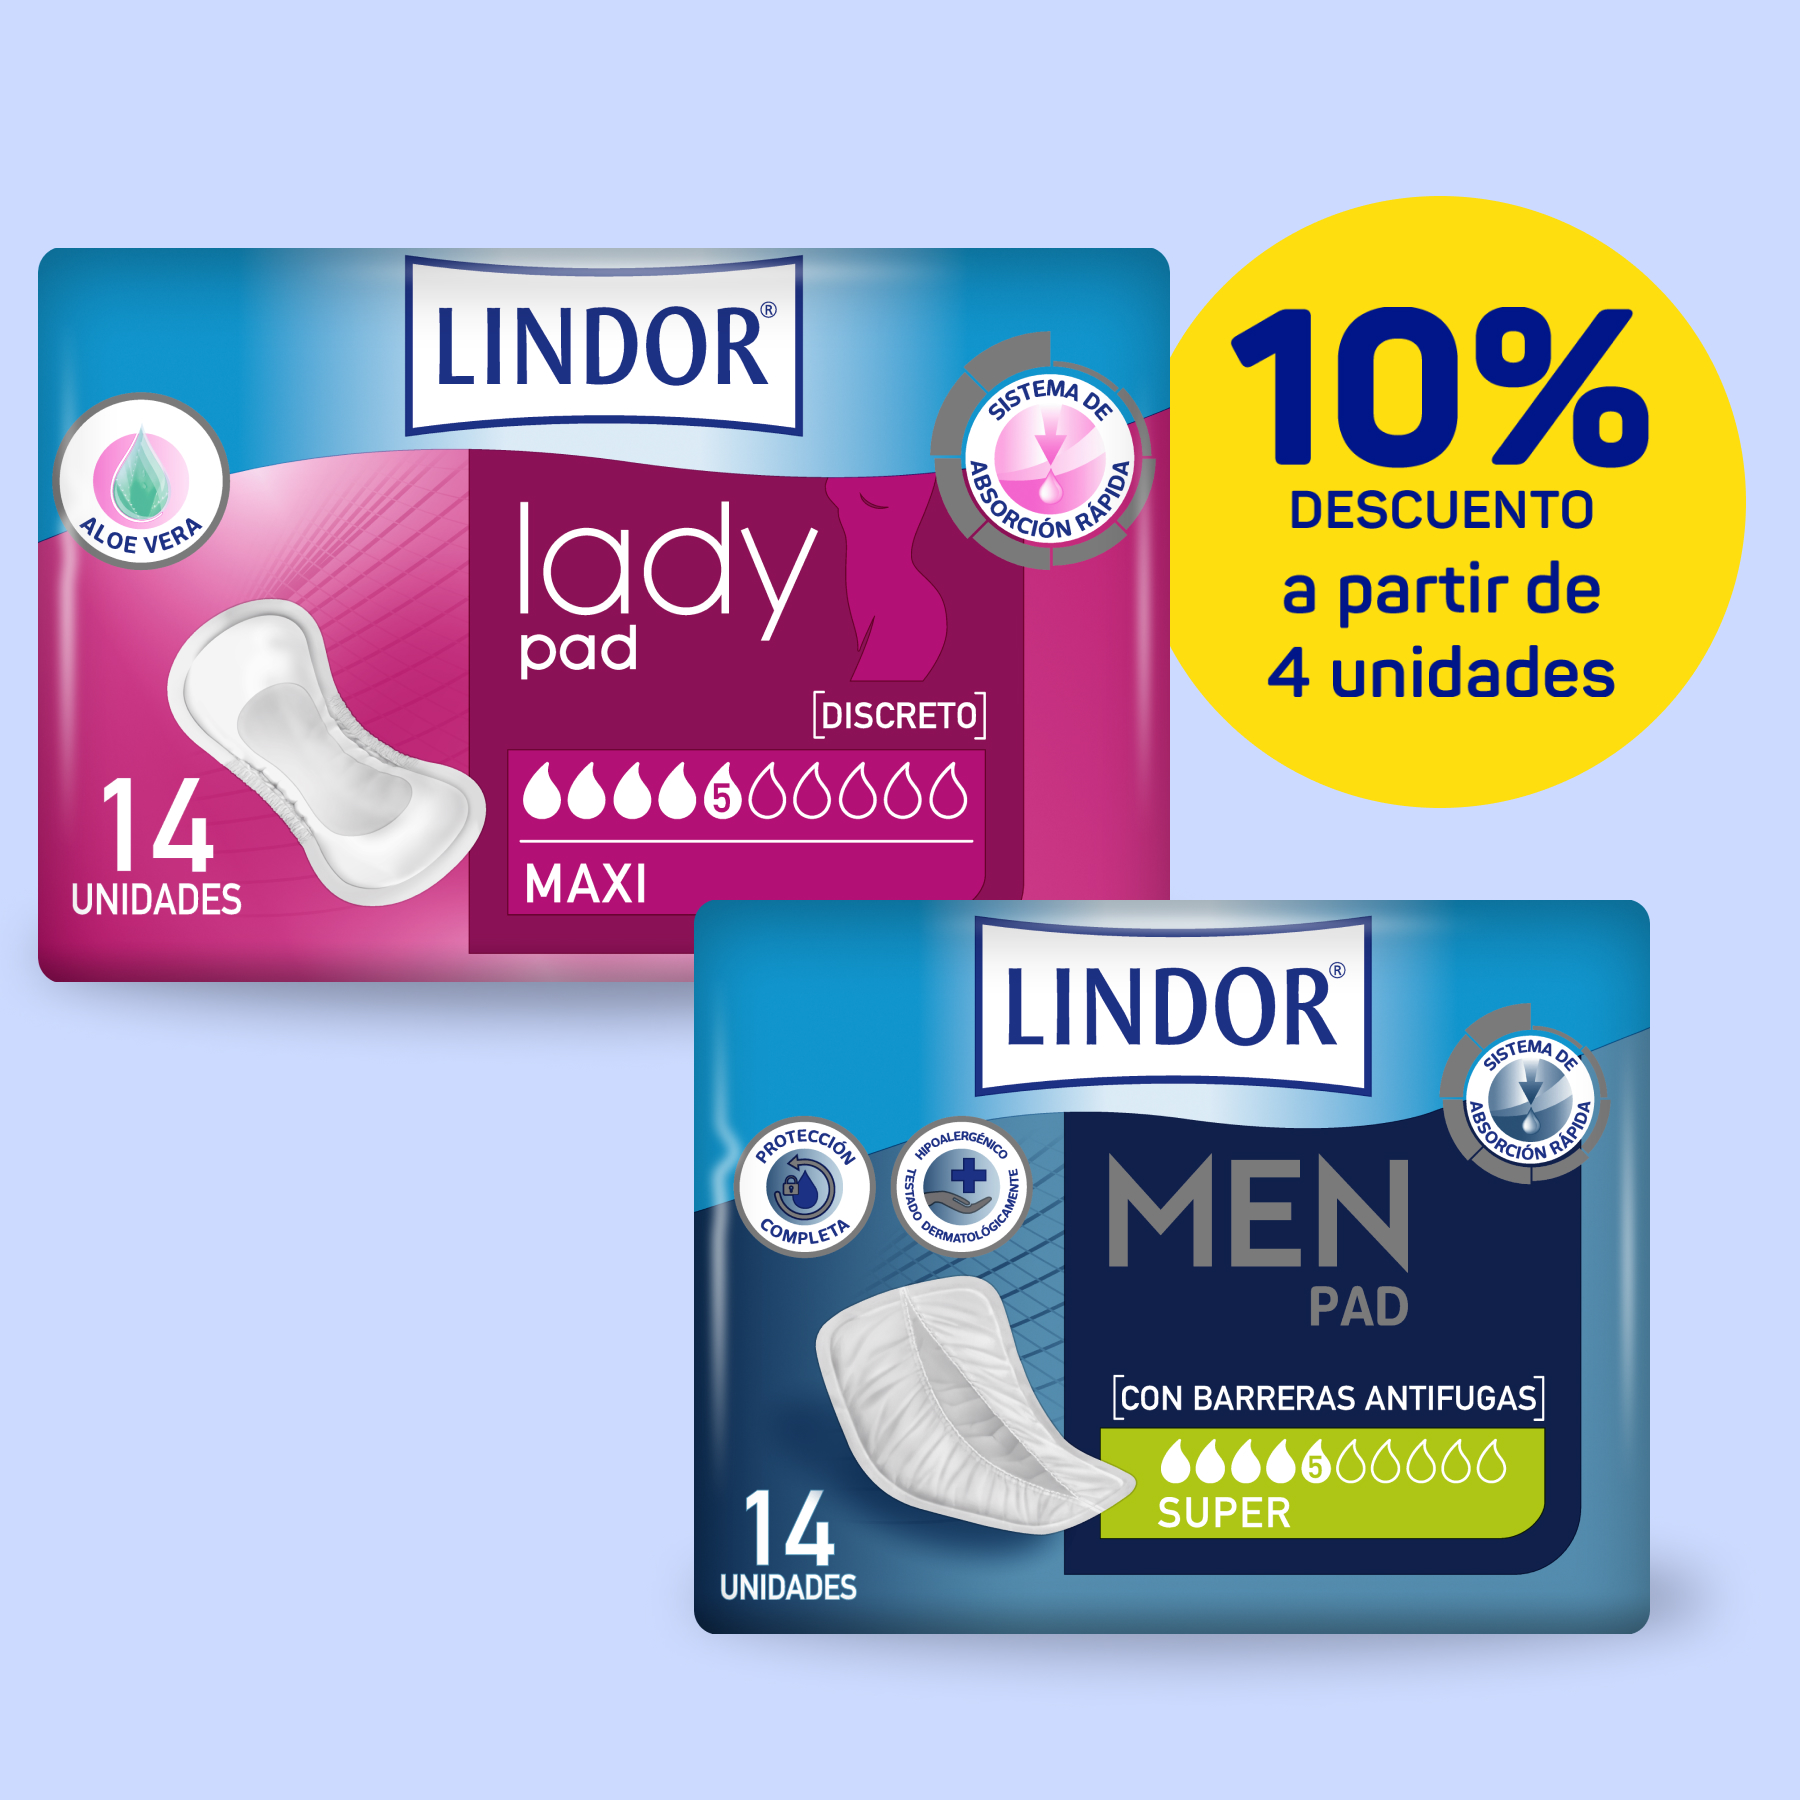 Lindor Lady & Lindor Men - 10% descuento a partir de 4 uds